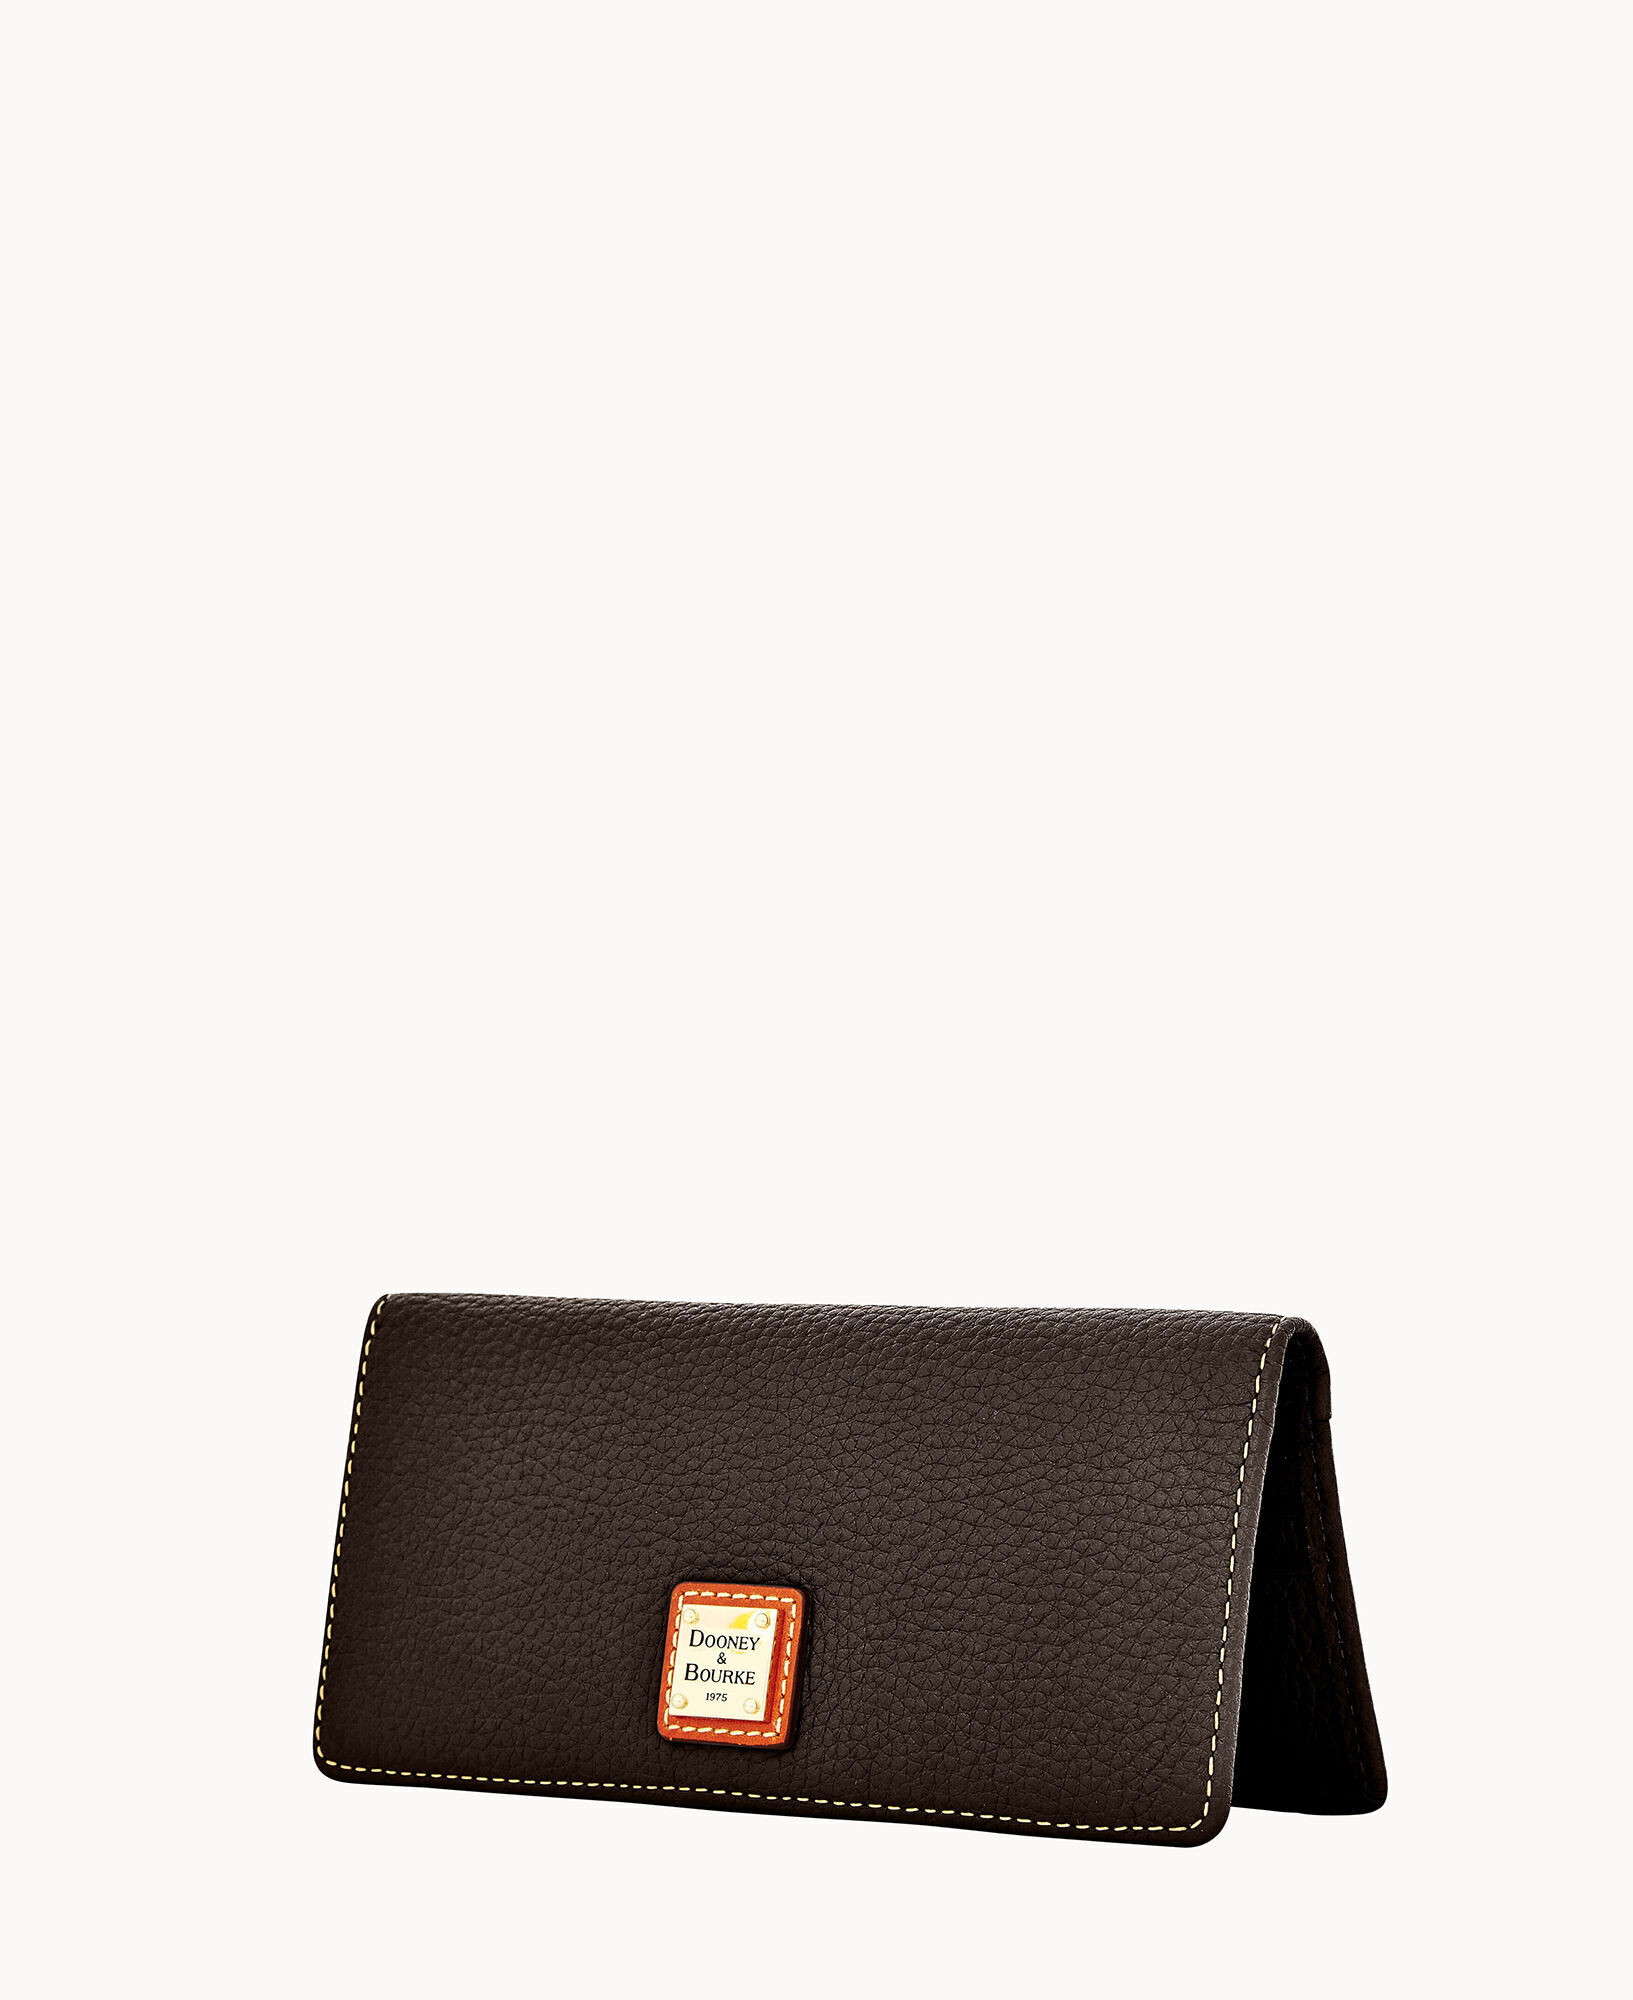 Black and Monogram Classic Coach Mini Wallet FREE